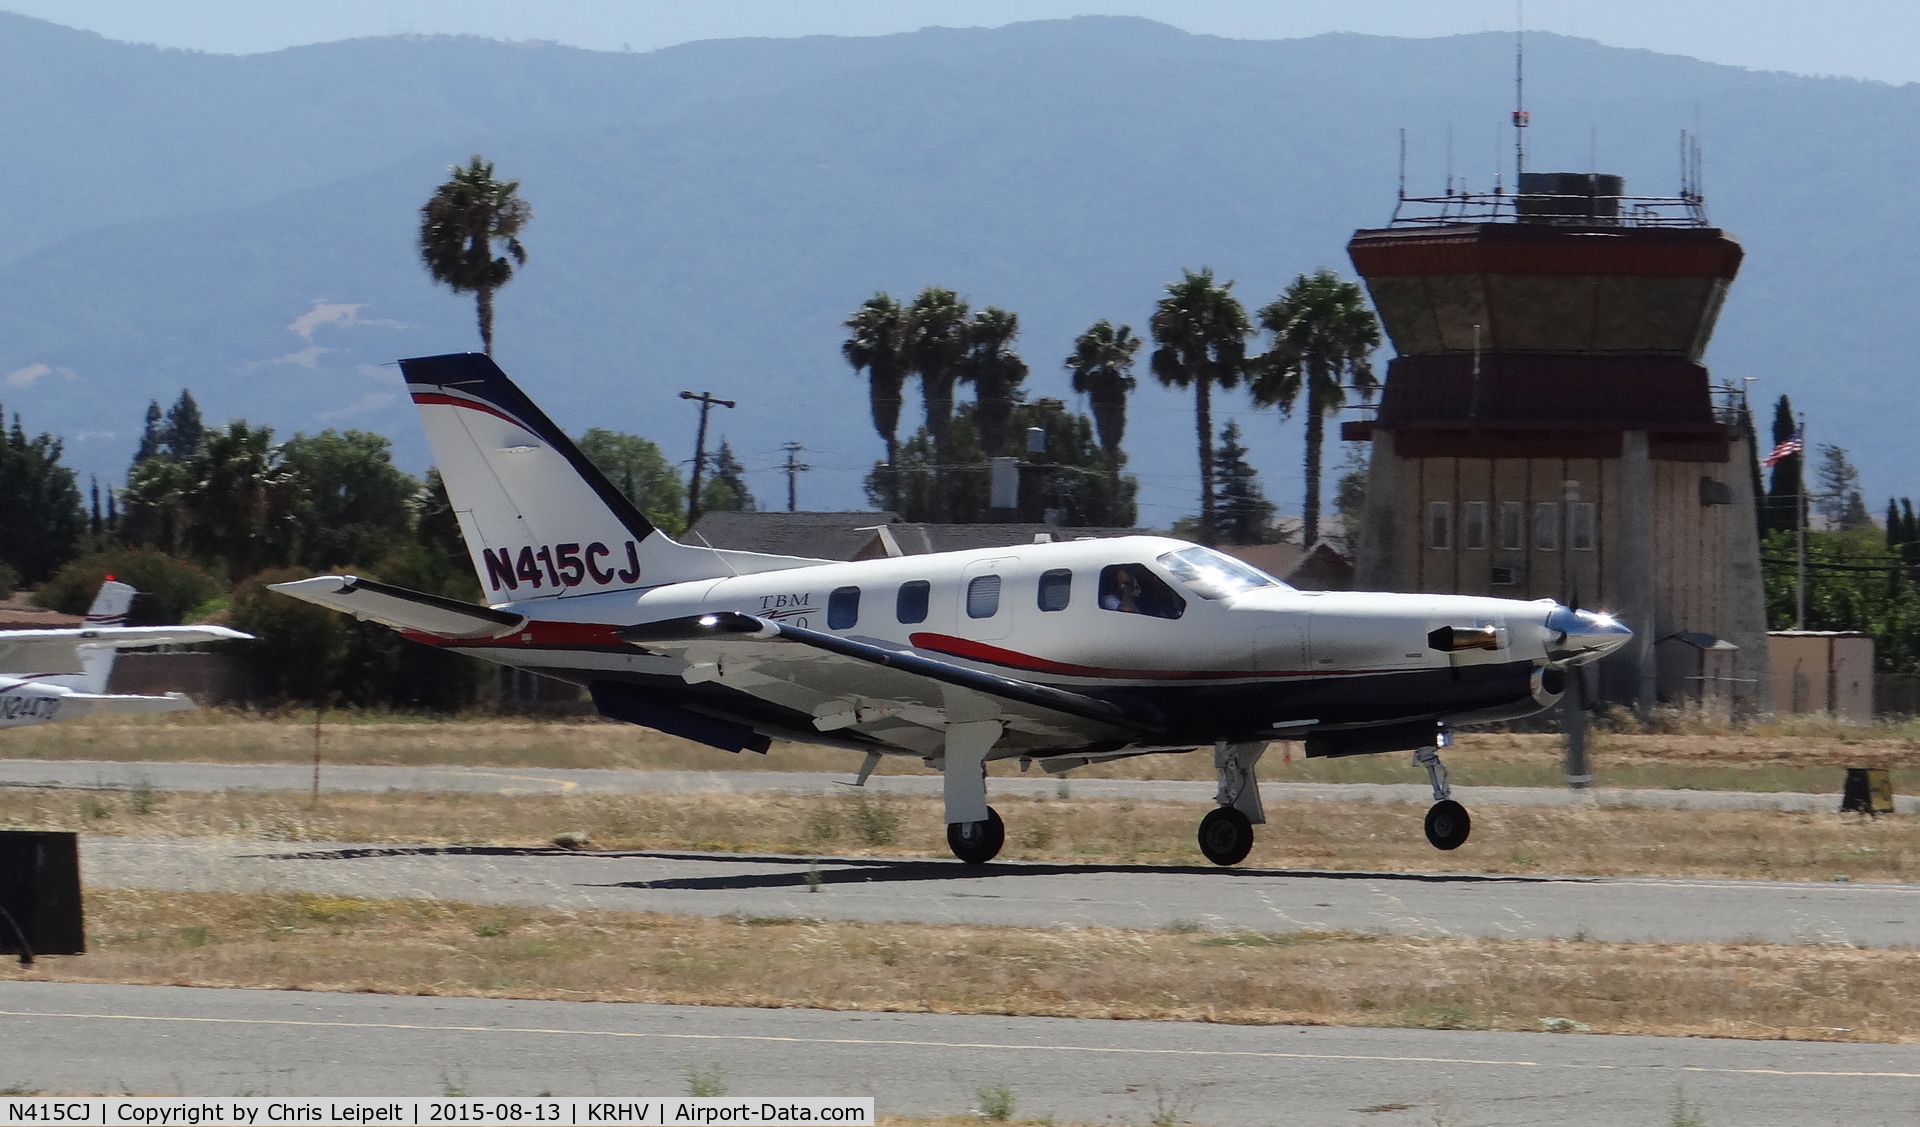 N415CJ, 2007 Socata TBM-700 C/N 415, Stratos Partners LLC (Los Gatos, CA) 2007 Socata TBM-700 departing runway 31R at Reid Hillview Airport, San Jose, CA.